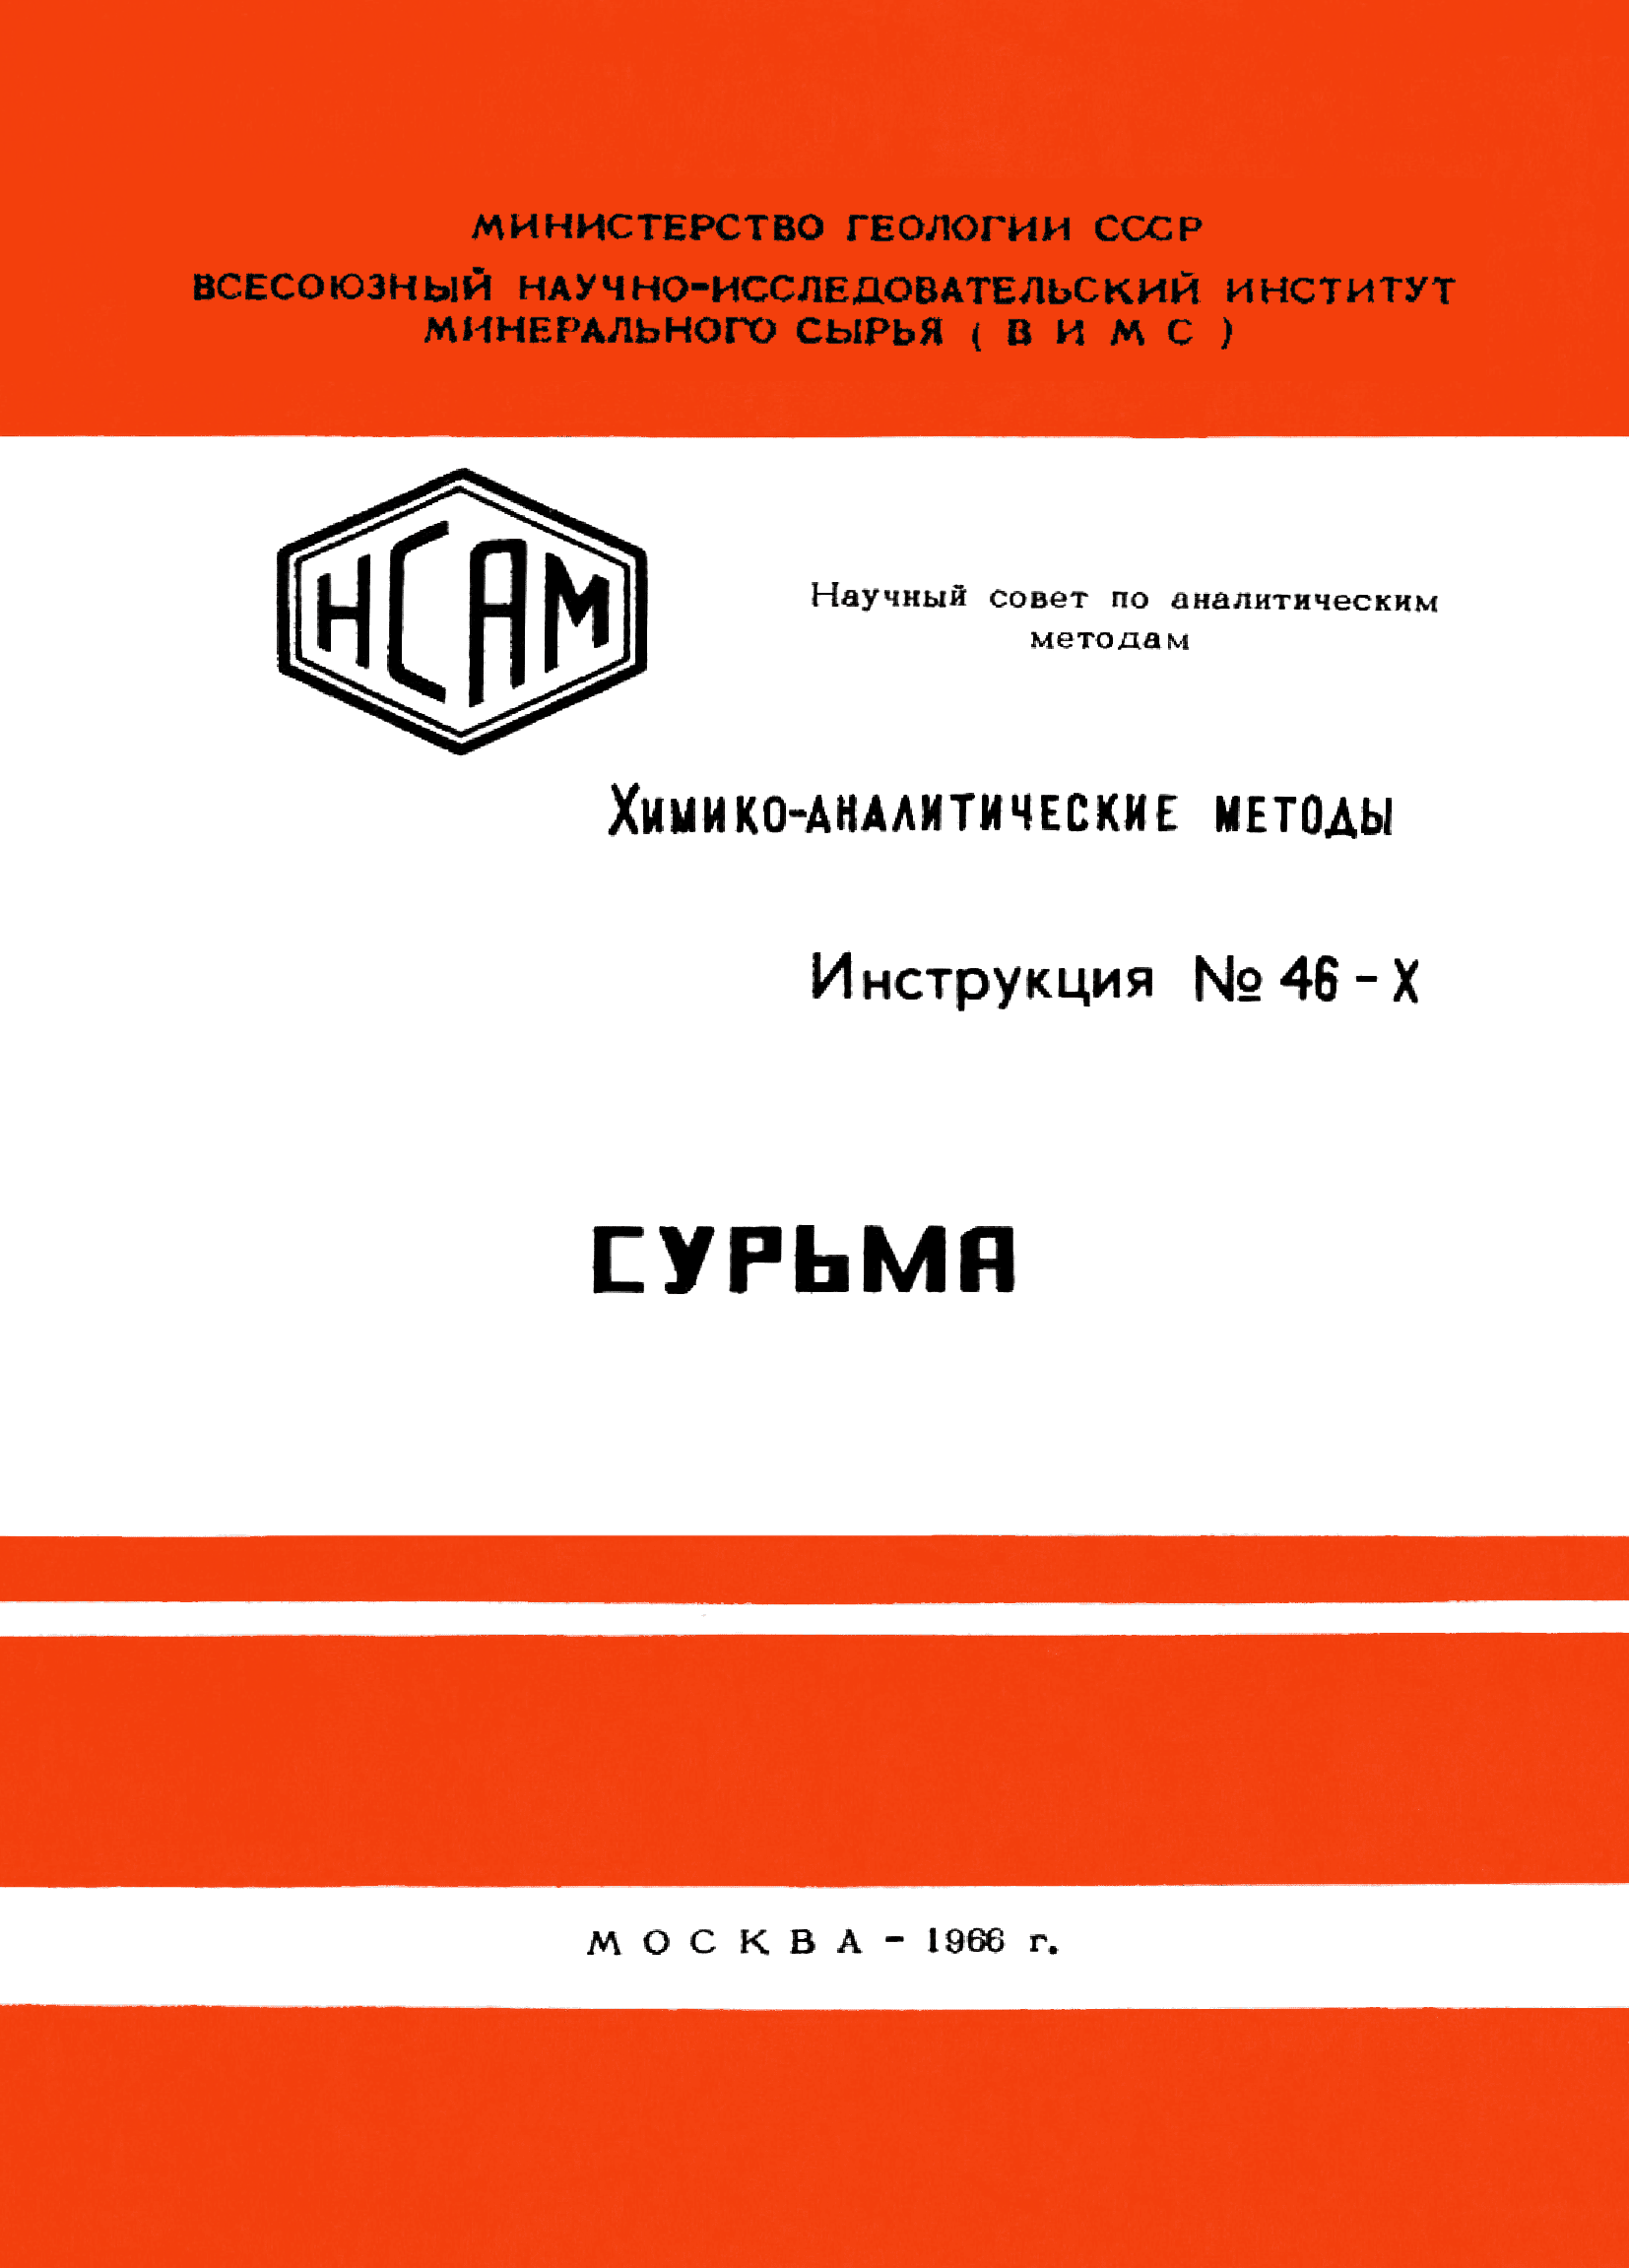 Инструкция НСАМ 46-Х